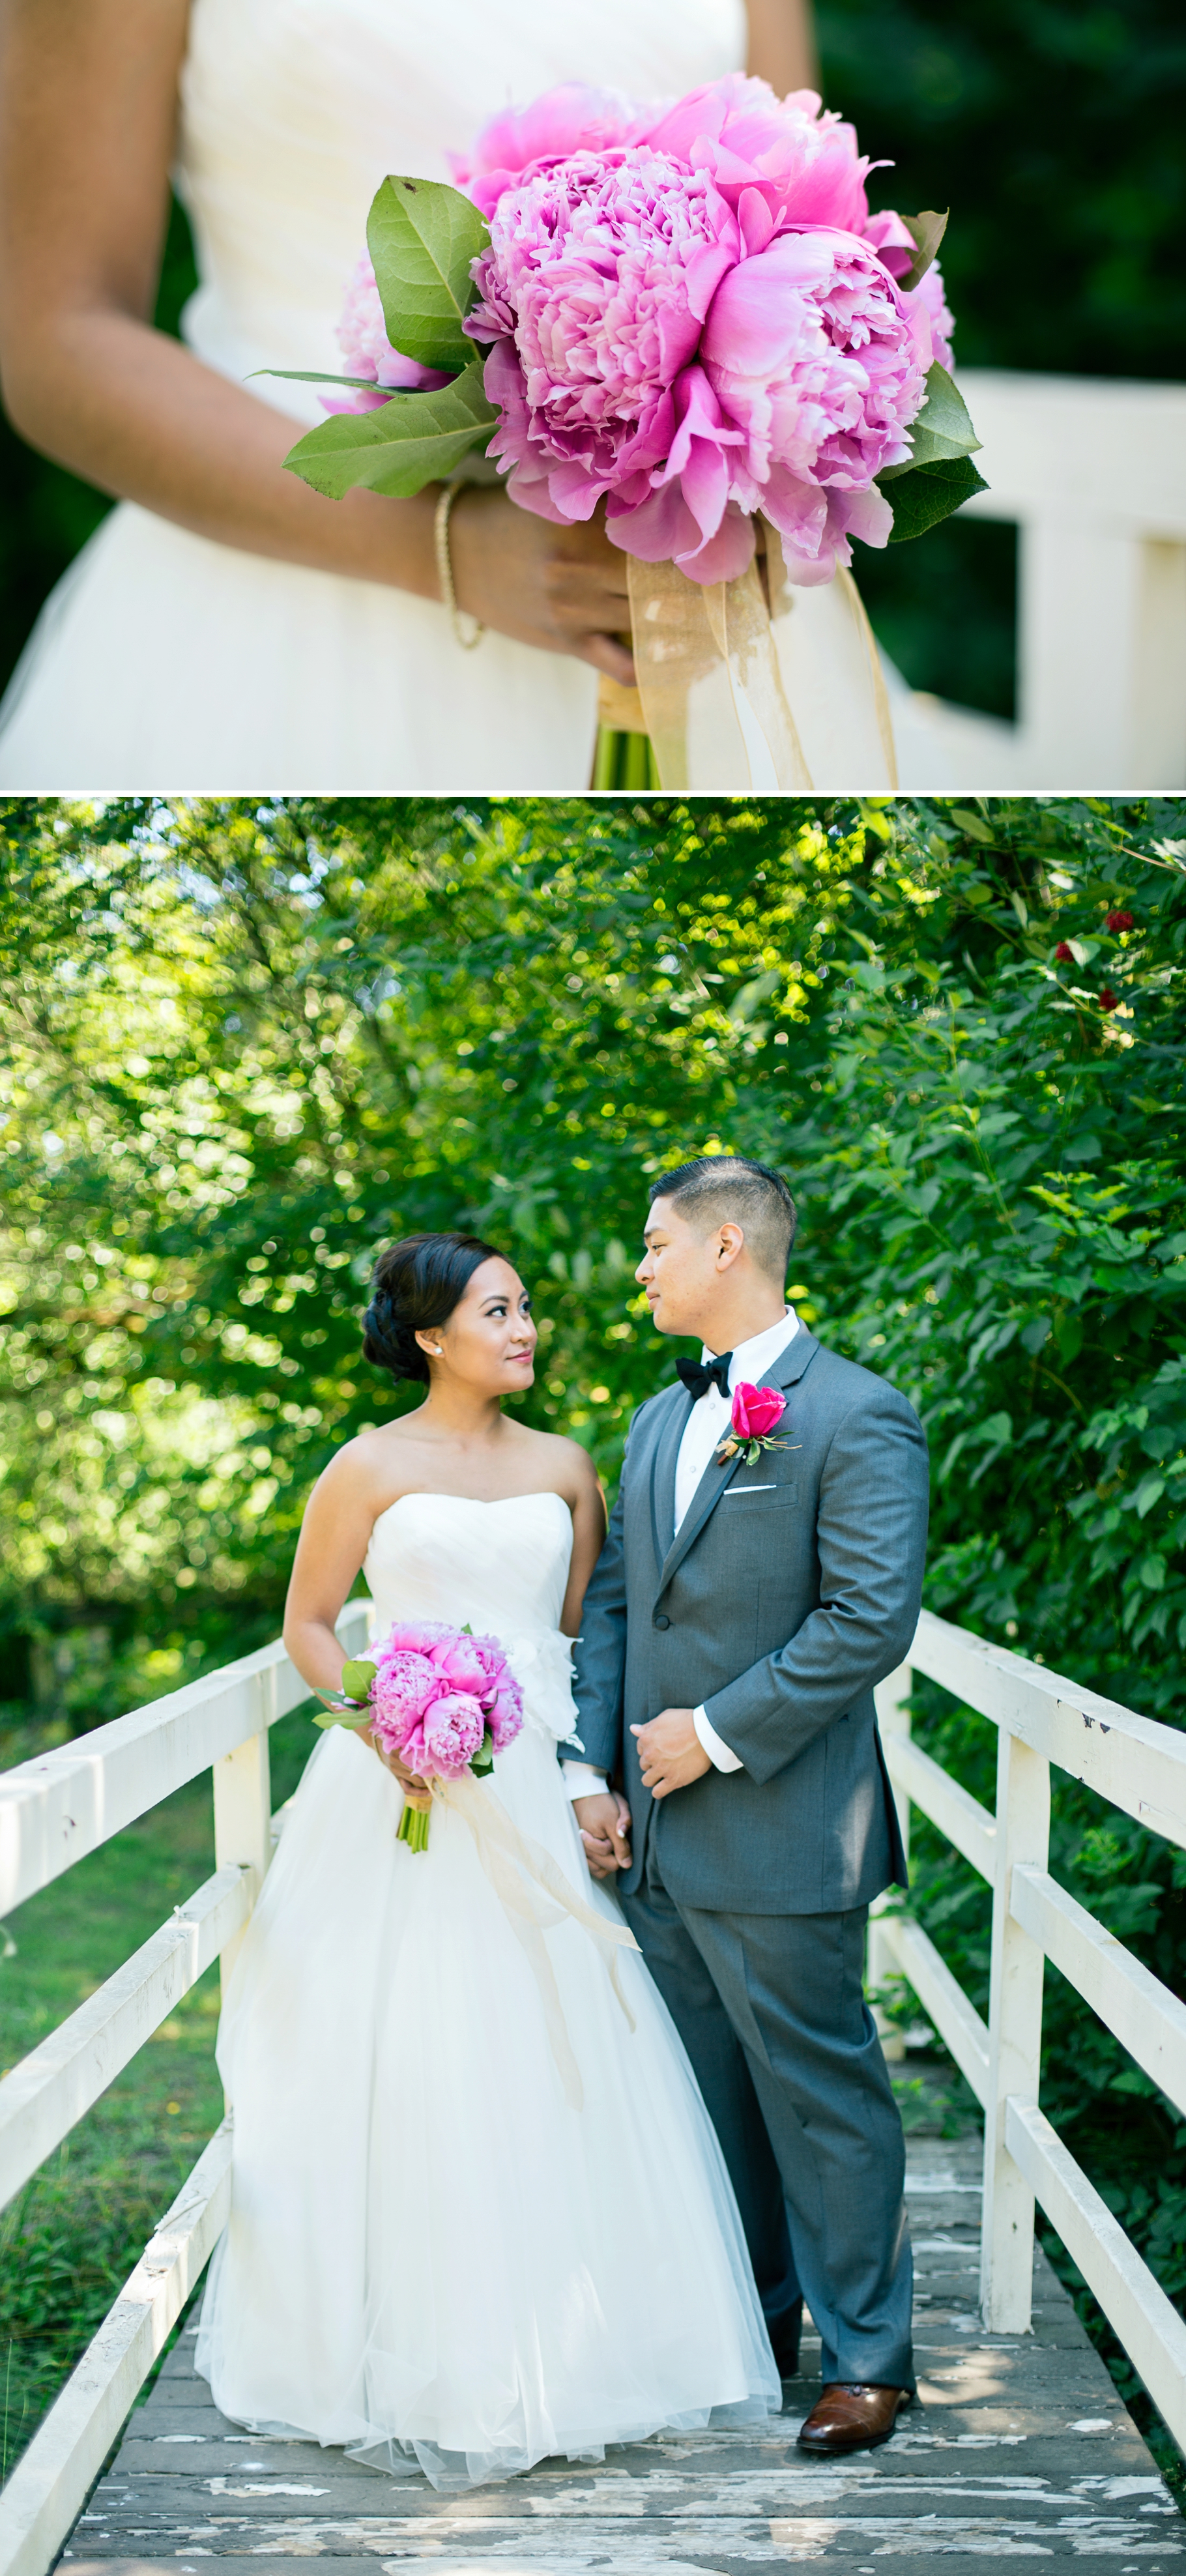 19-Bride-Groom-Wedding-Day-Portraits-Photographer-Peony-Bouquet-Rock-Creek-Gardens-Seattle-Wedding-Photography-by-Betty-Elaine